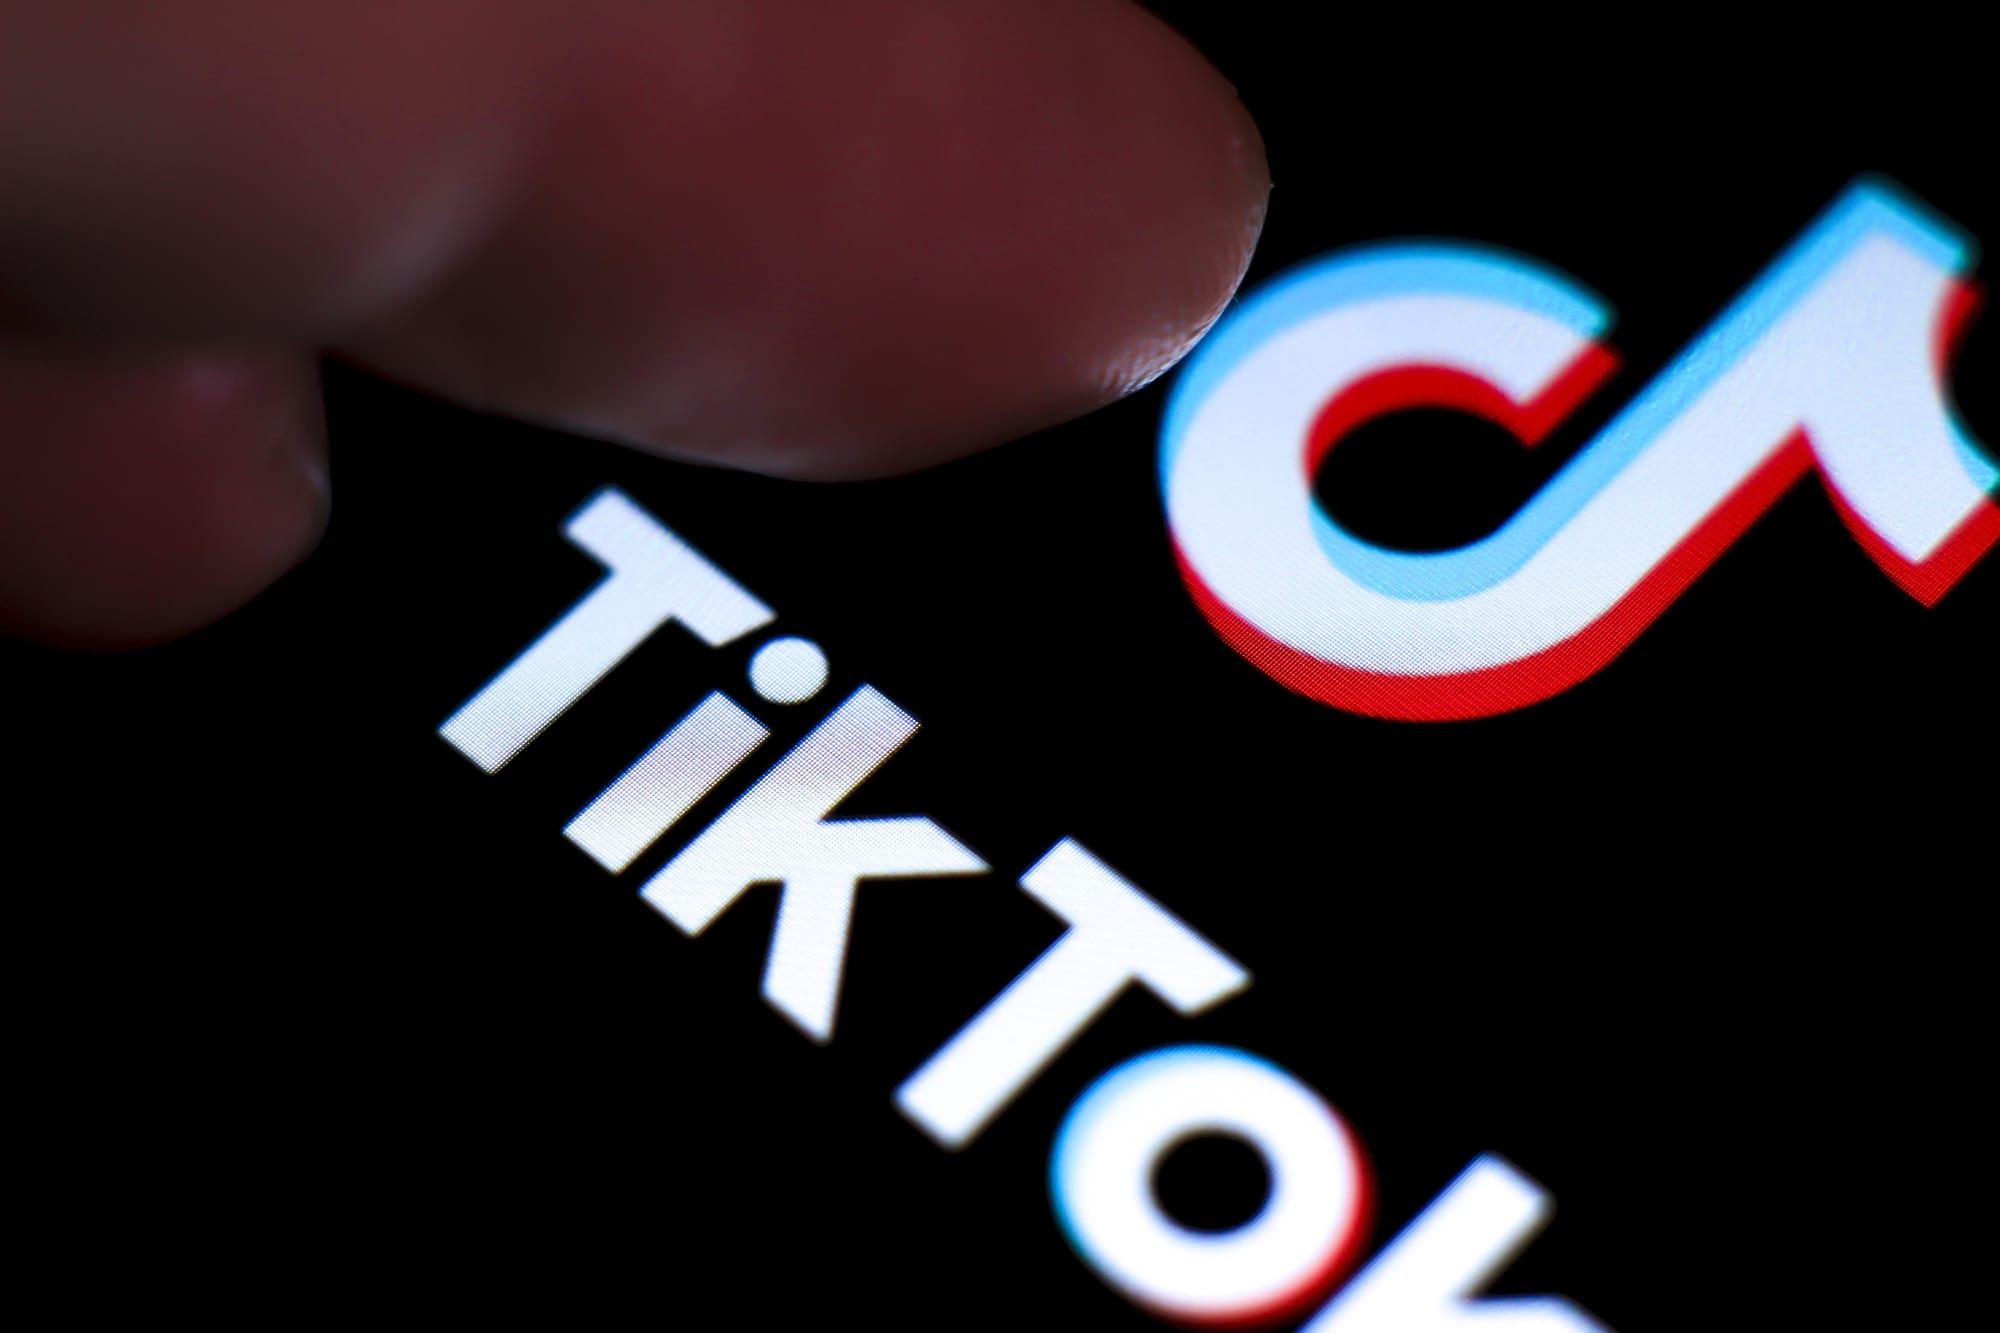 The TikTok logo on a mobile device